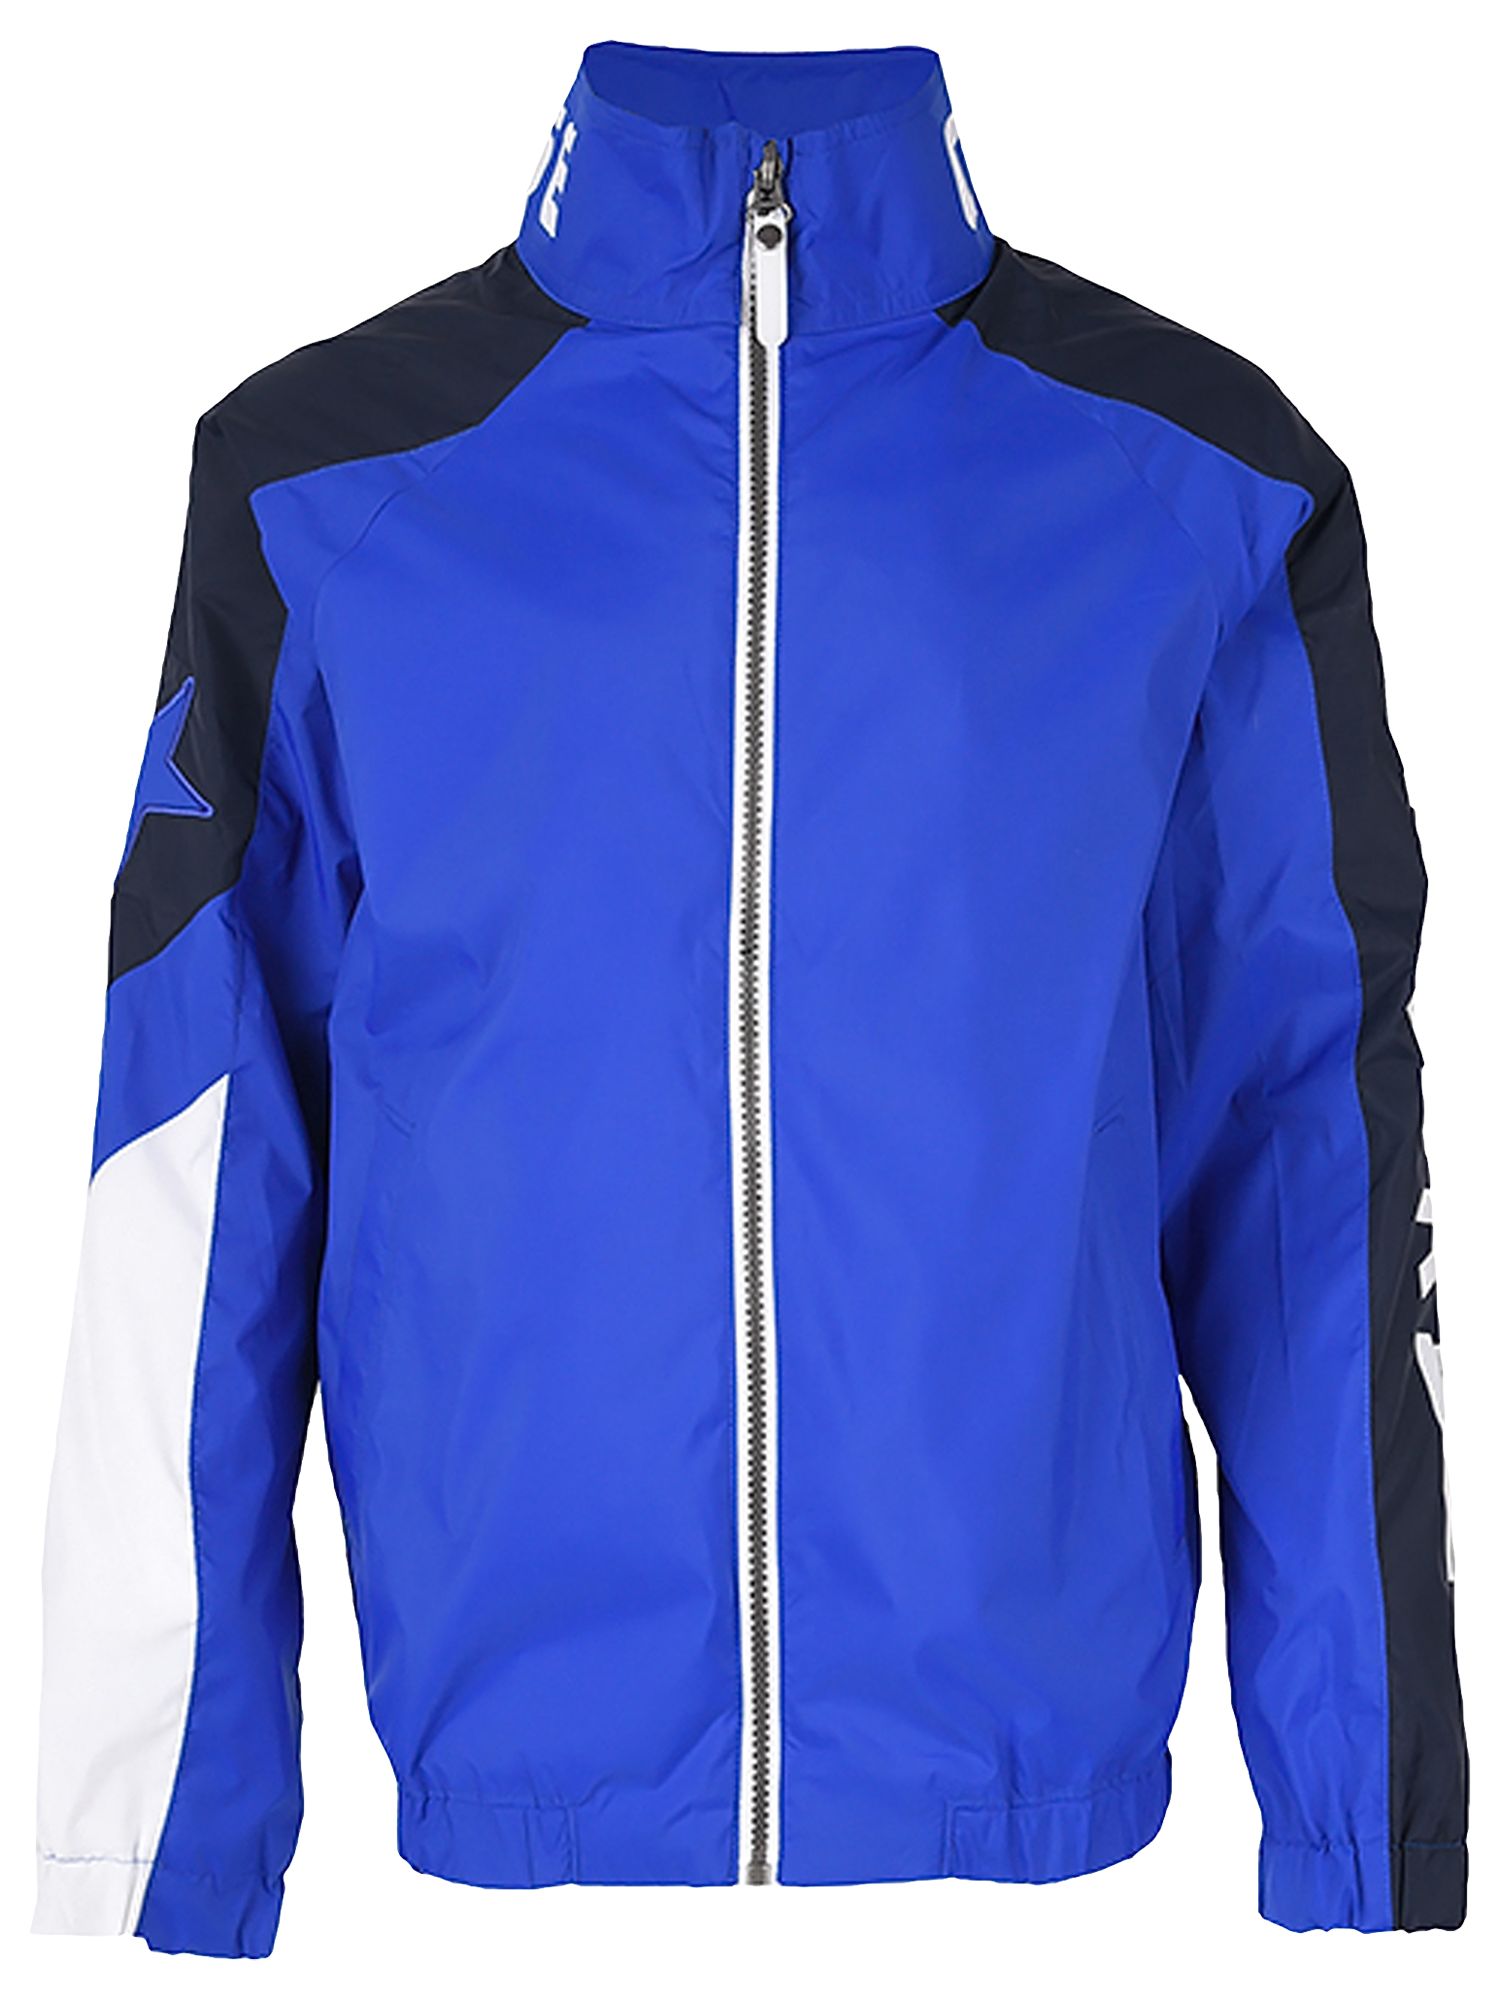 converse blue jacket